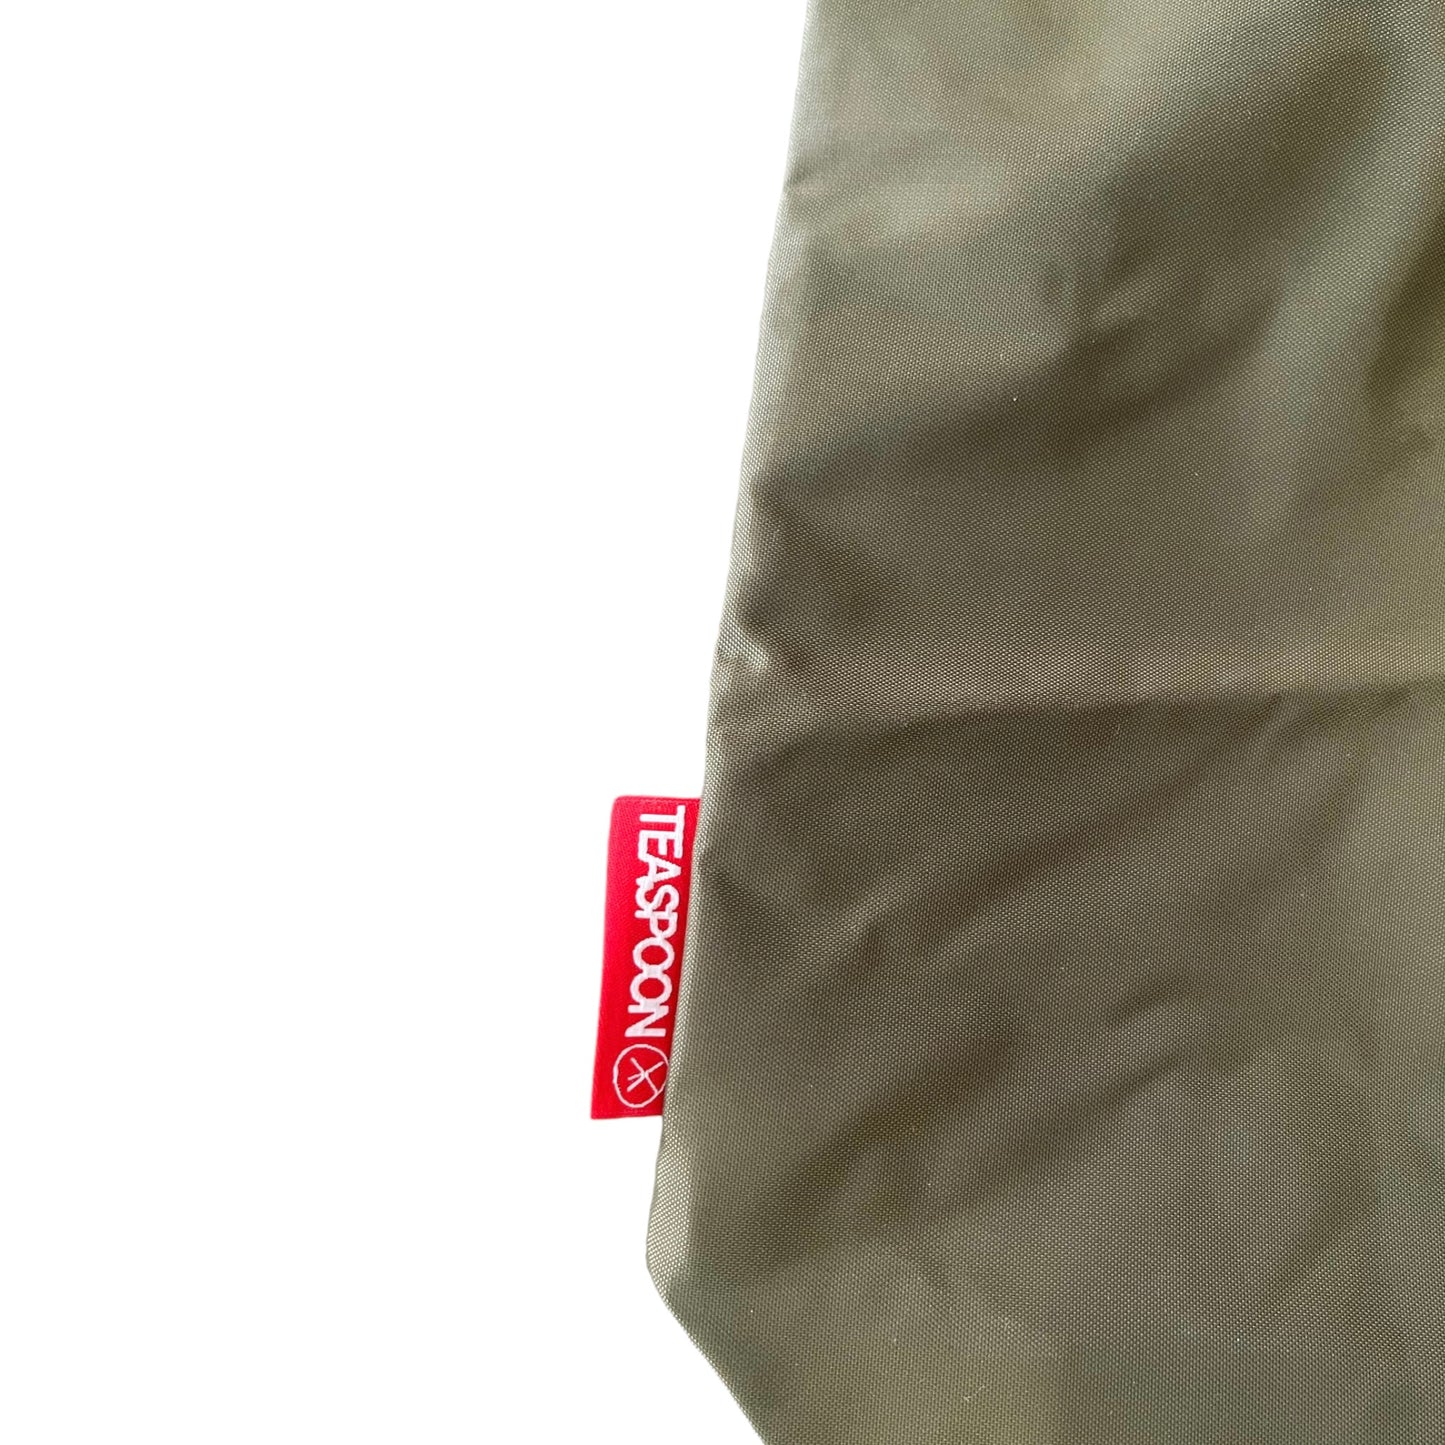 Super Beach Bag [ 100% Nylon ] Waterproof